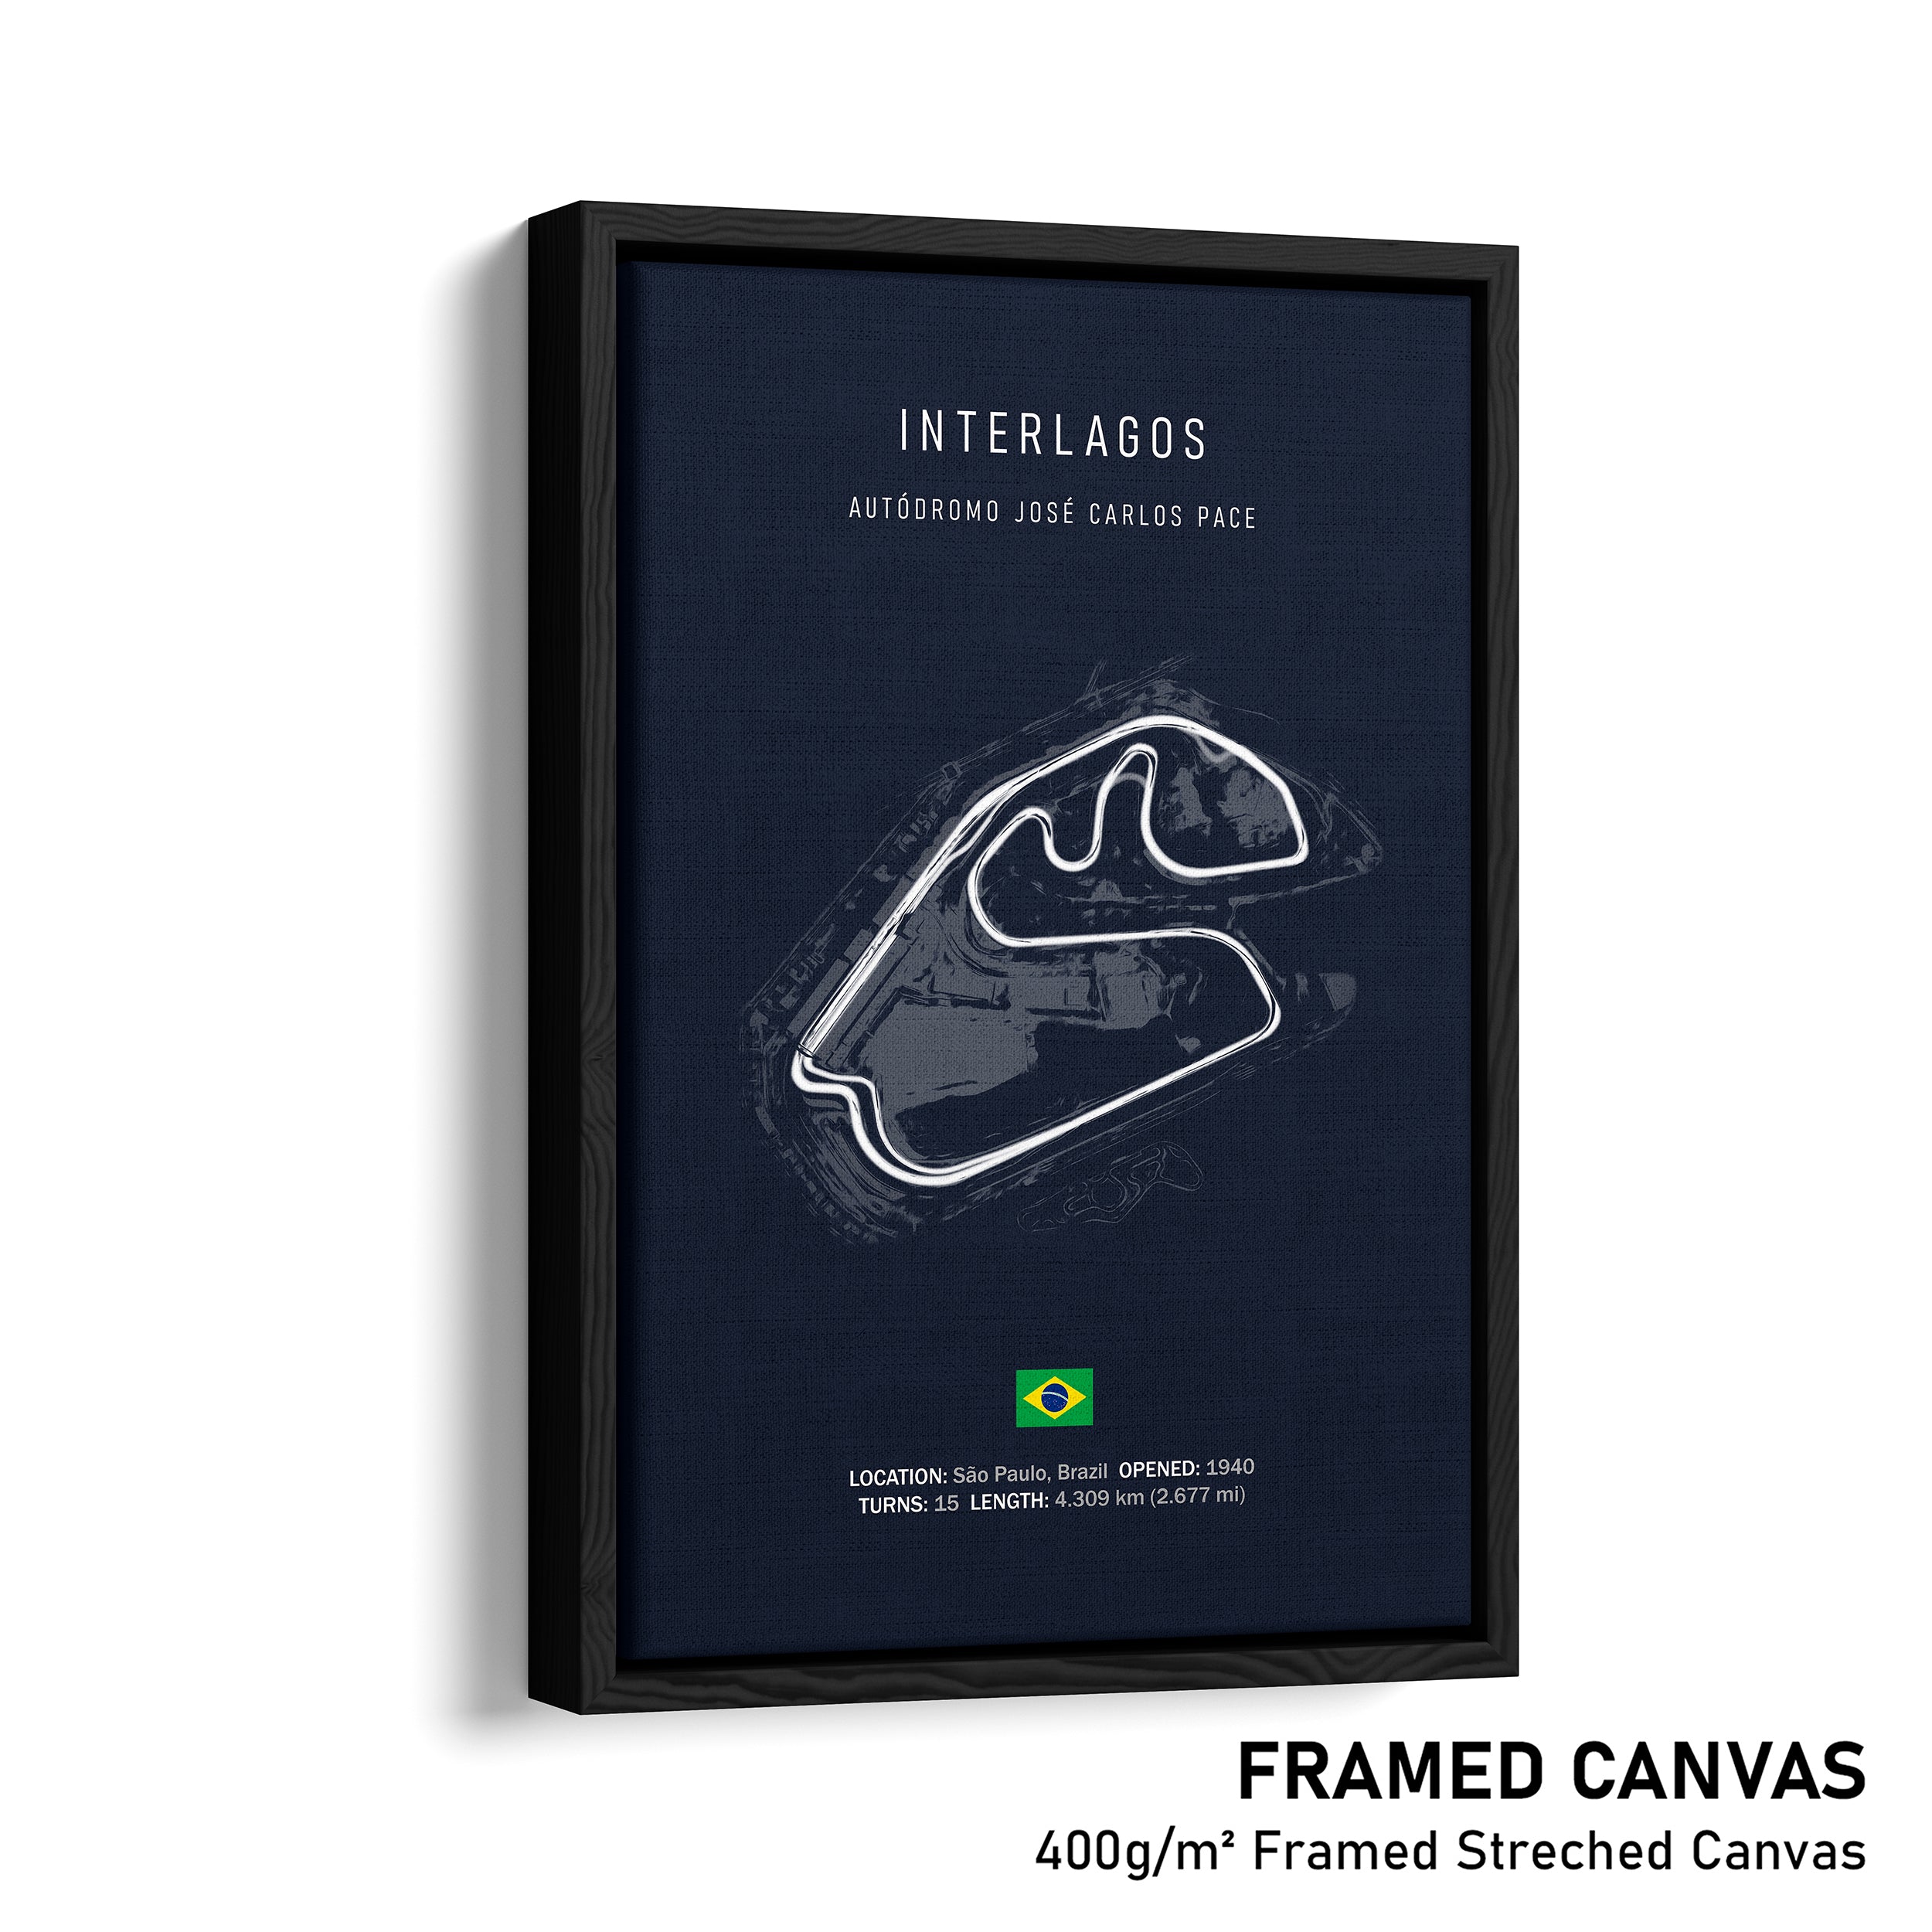 Autódromo José Carlos Pace Interlagos - Racetrack Framed Canvas Print